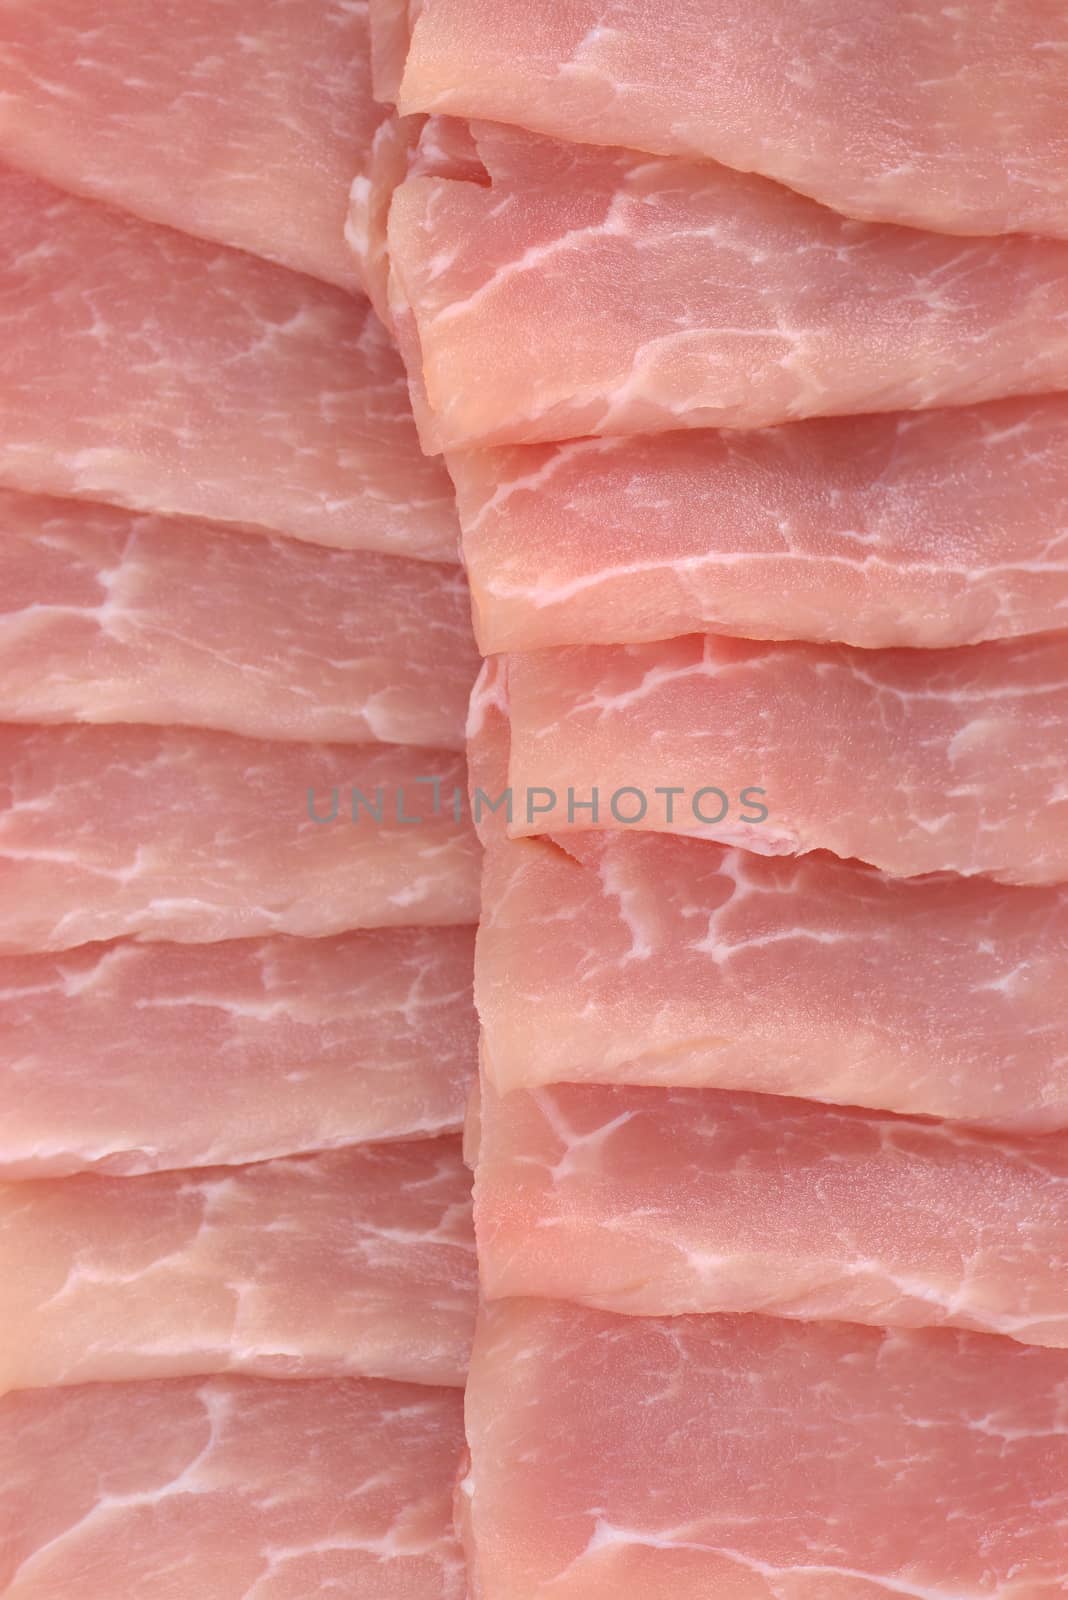 Raw pork slices by antpkr